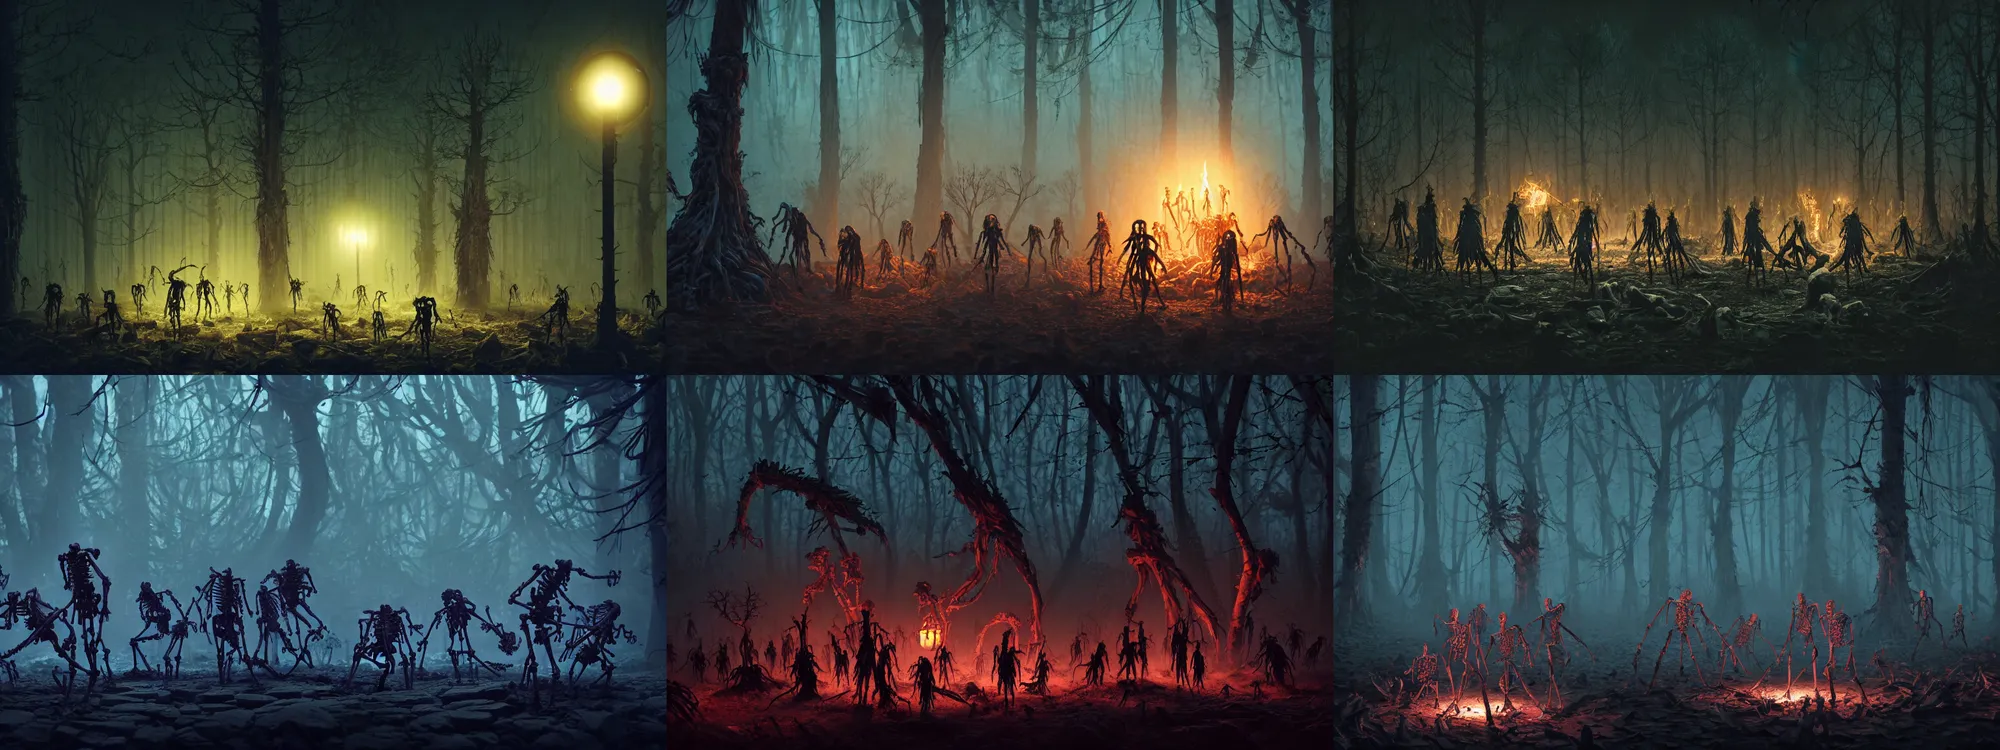 Prompt: necromancer summoning skeletons in a dark ritual amongst trees at night, close up, Wadim Kashin, Simon Stalenhag, XF IQ4, f/1.4, ISO 200, 1/160s, 8K, RAW, featured in artstation, octane render, cinematic, elegant, intricate, 8k